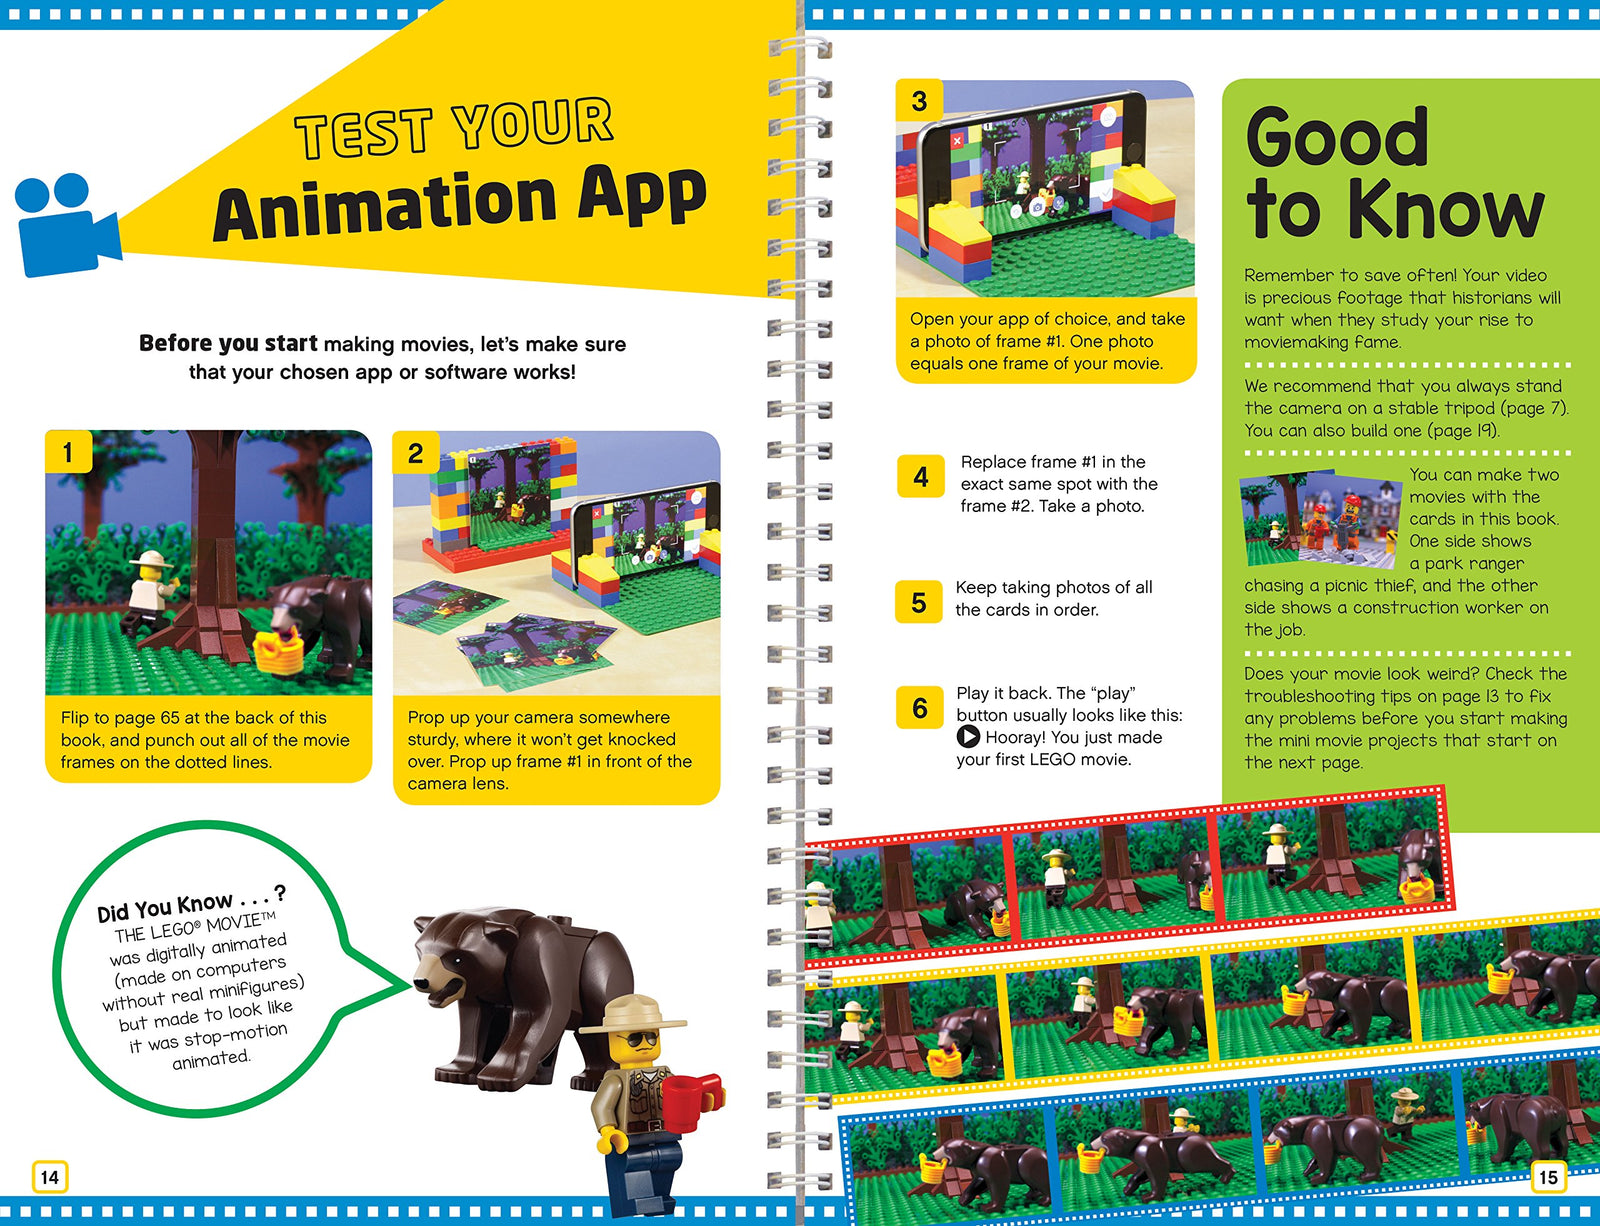 KLUTZ Lego Make Your Own Movie Activity Kit